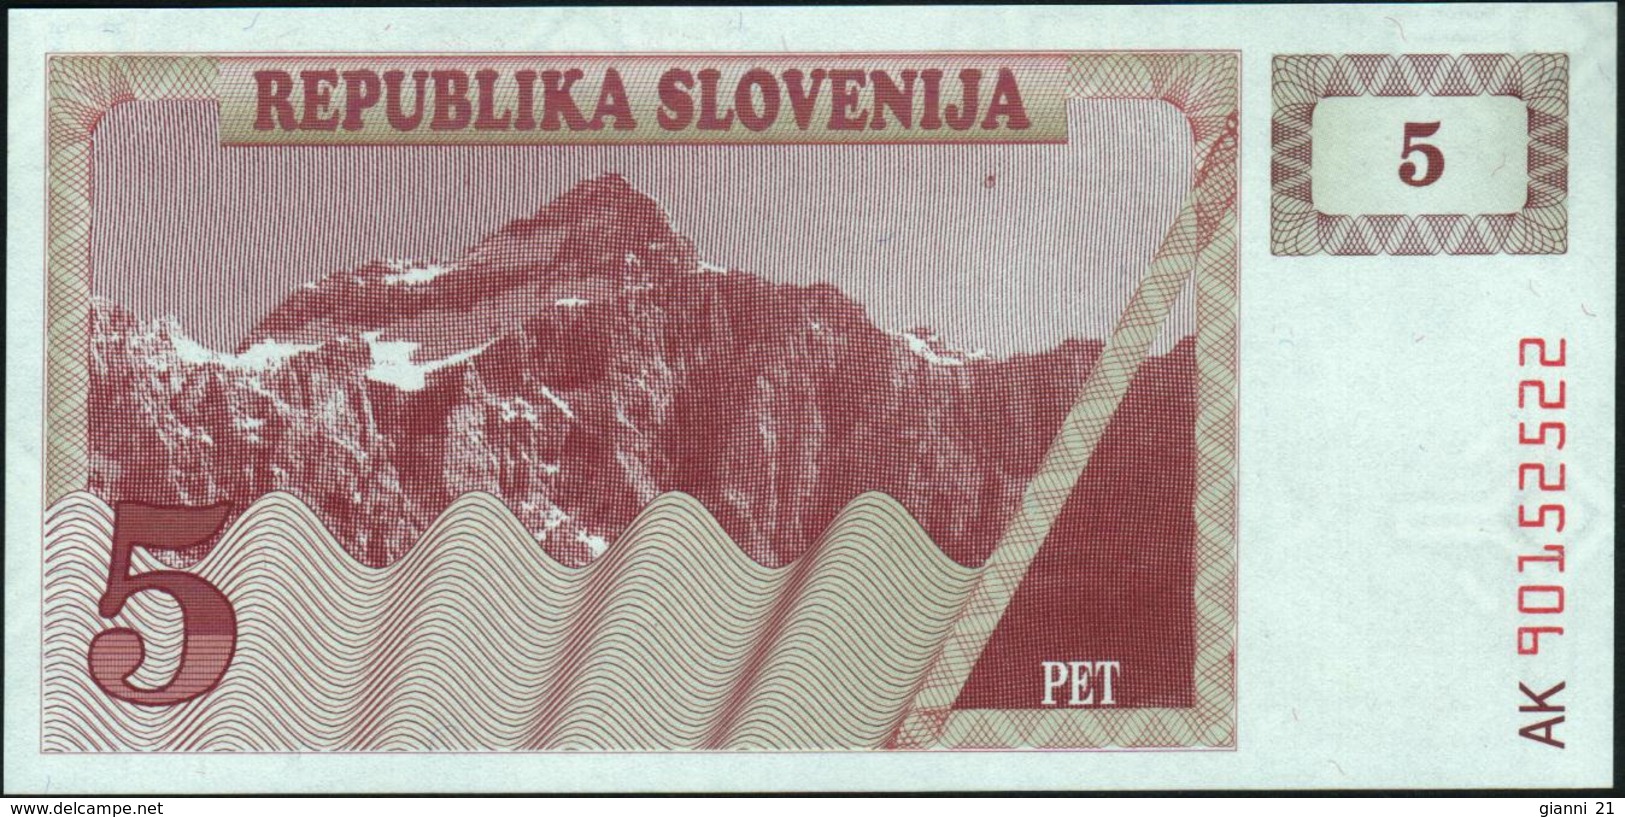 SLOVENIA - 5 Tolarjev 1990 {Republika Slovenija} UNC P.3 - Slovenia